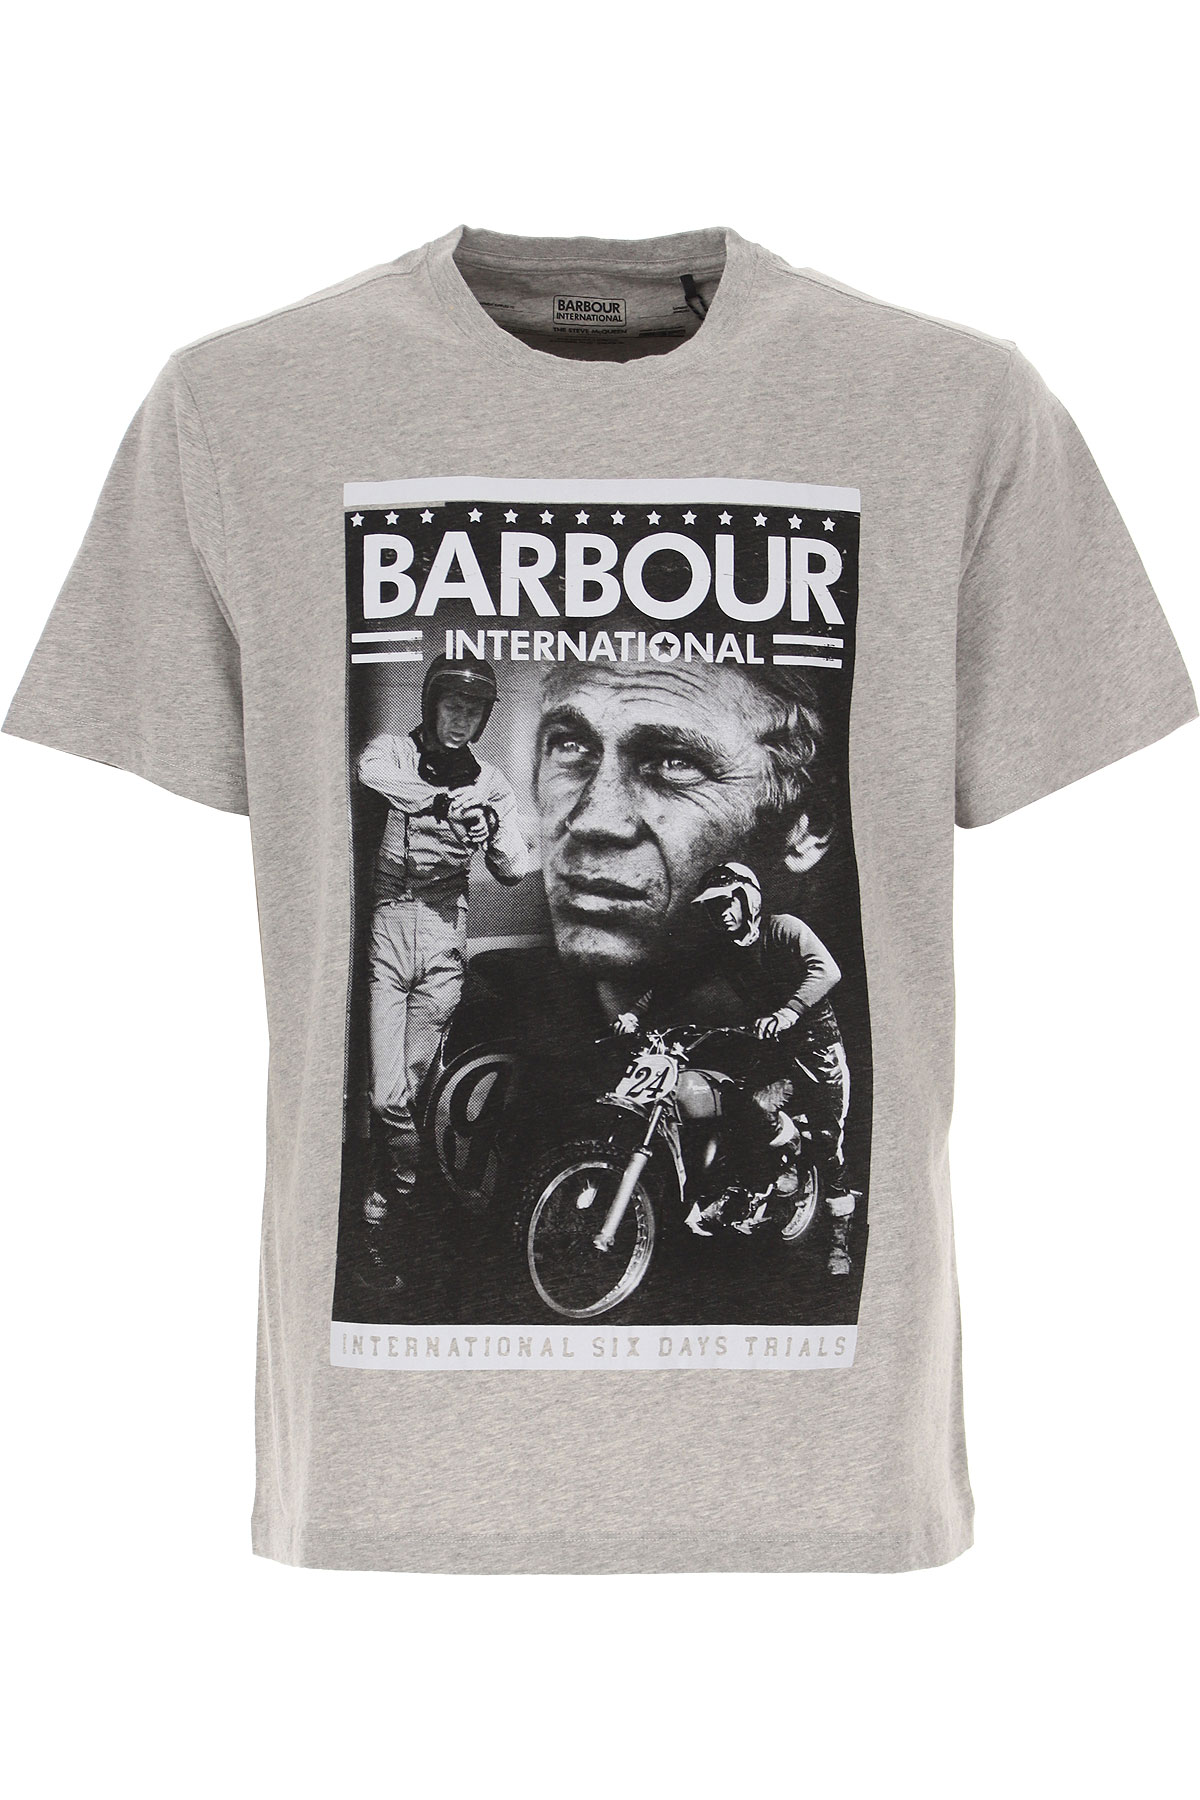 Shop Now For The Barbour T-Shirt for Men On Sale, Grey, Cotton, 2021, L XL  | AccuWeather Shop